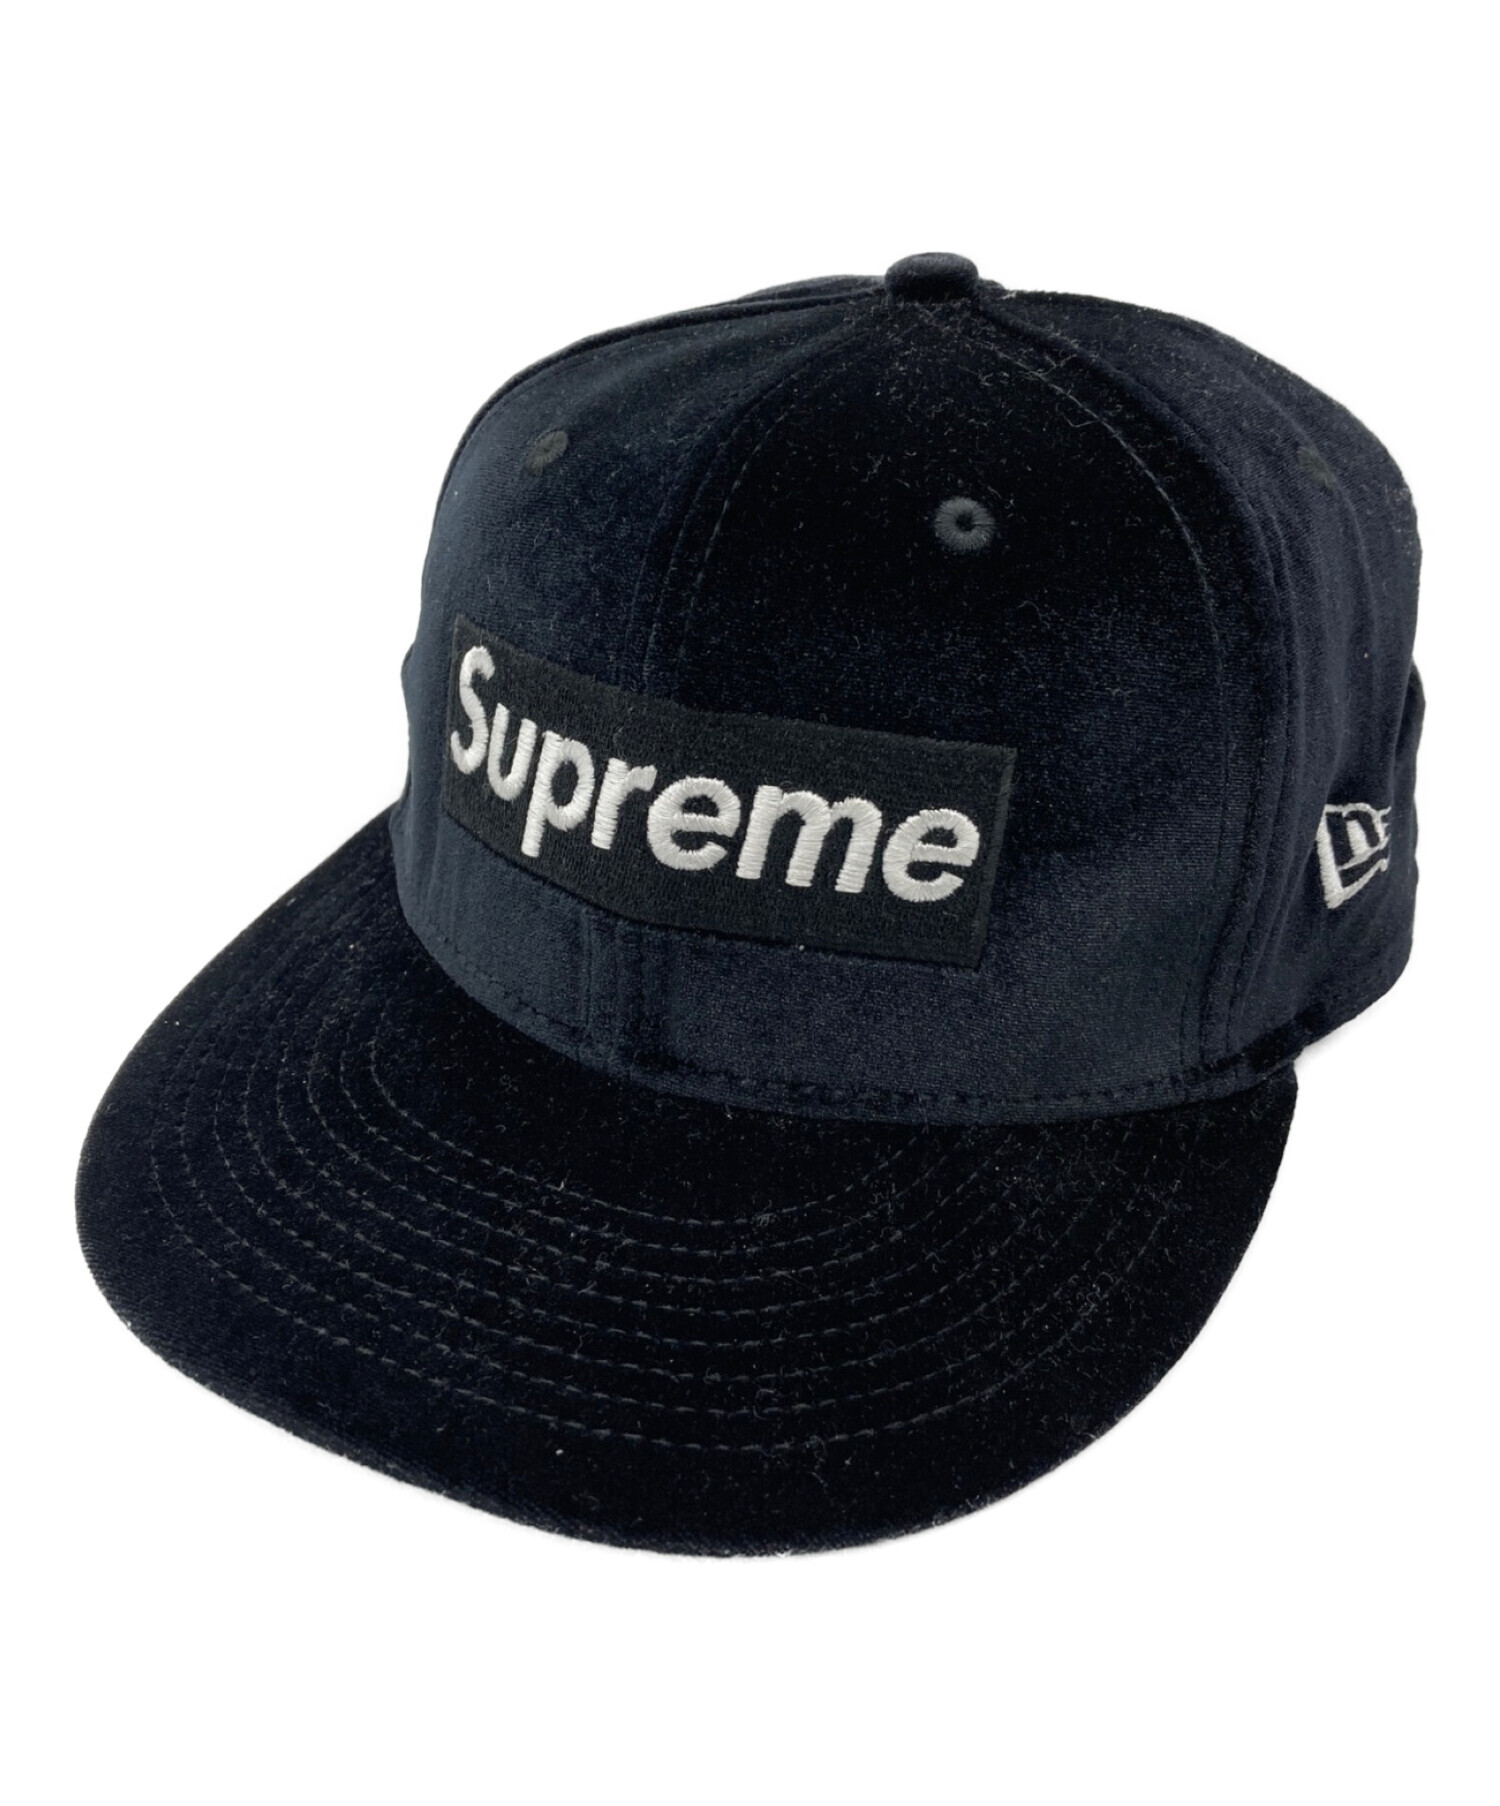 Supreme New Era cap